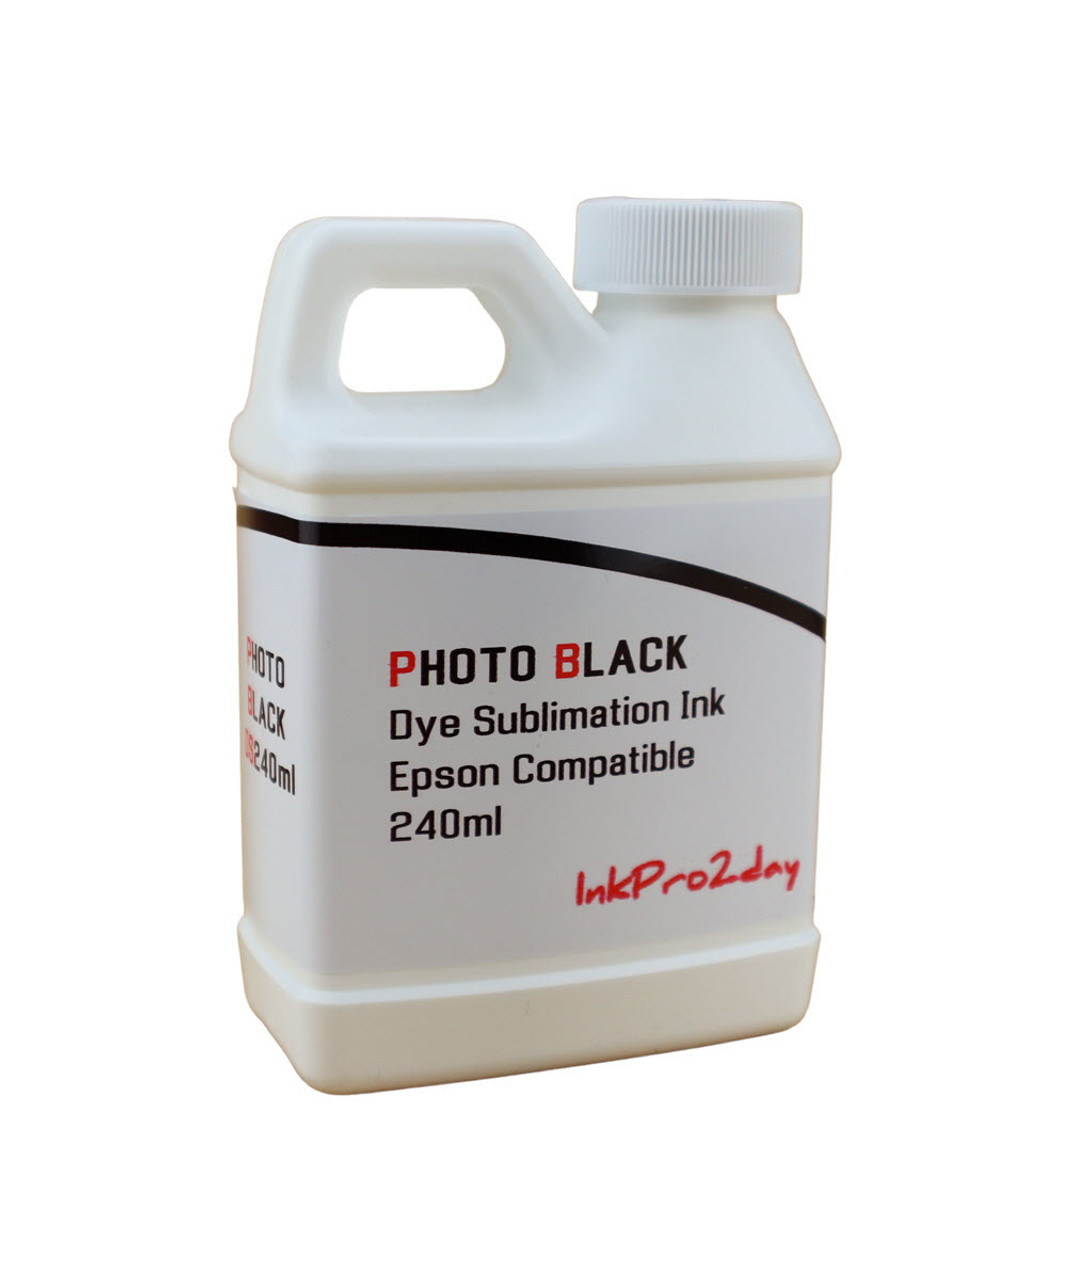 Photo Black Dye Sublimation Ink 240ml Bottle for Epson Stylus Pro 7880 9880 printers